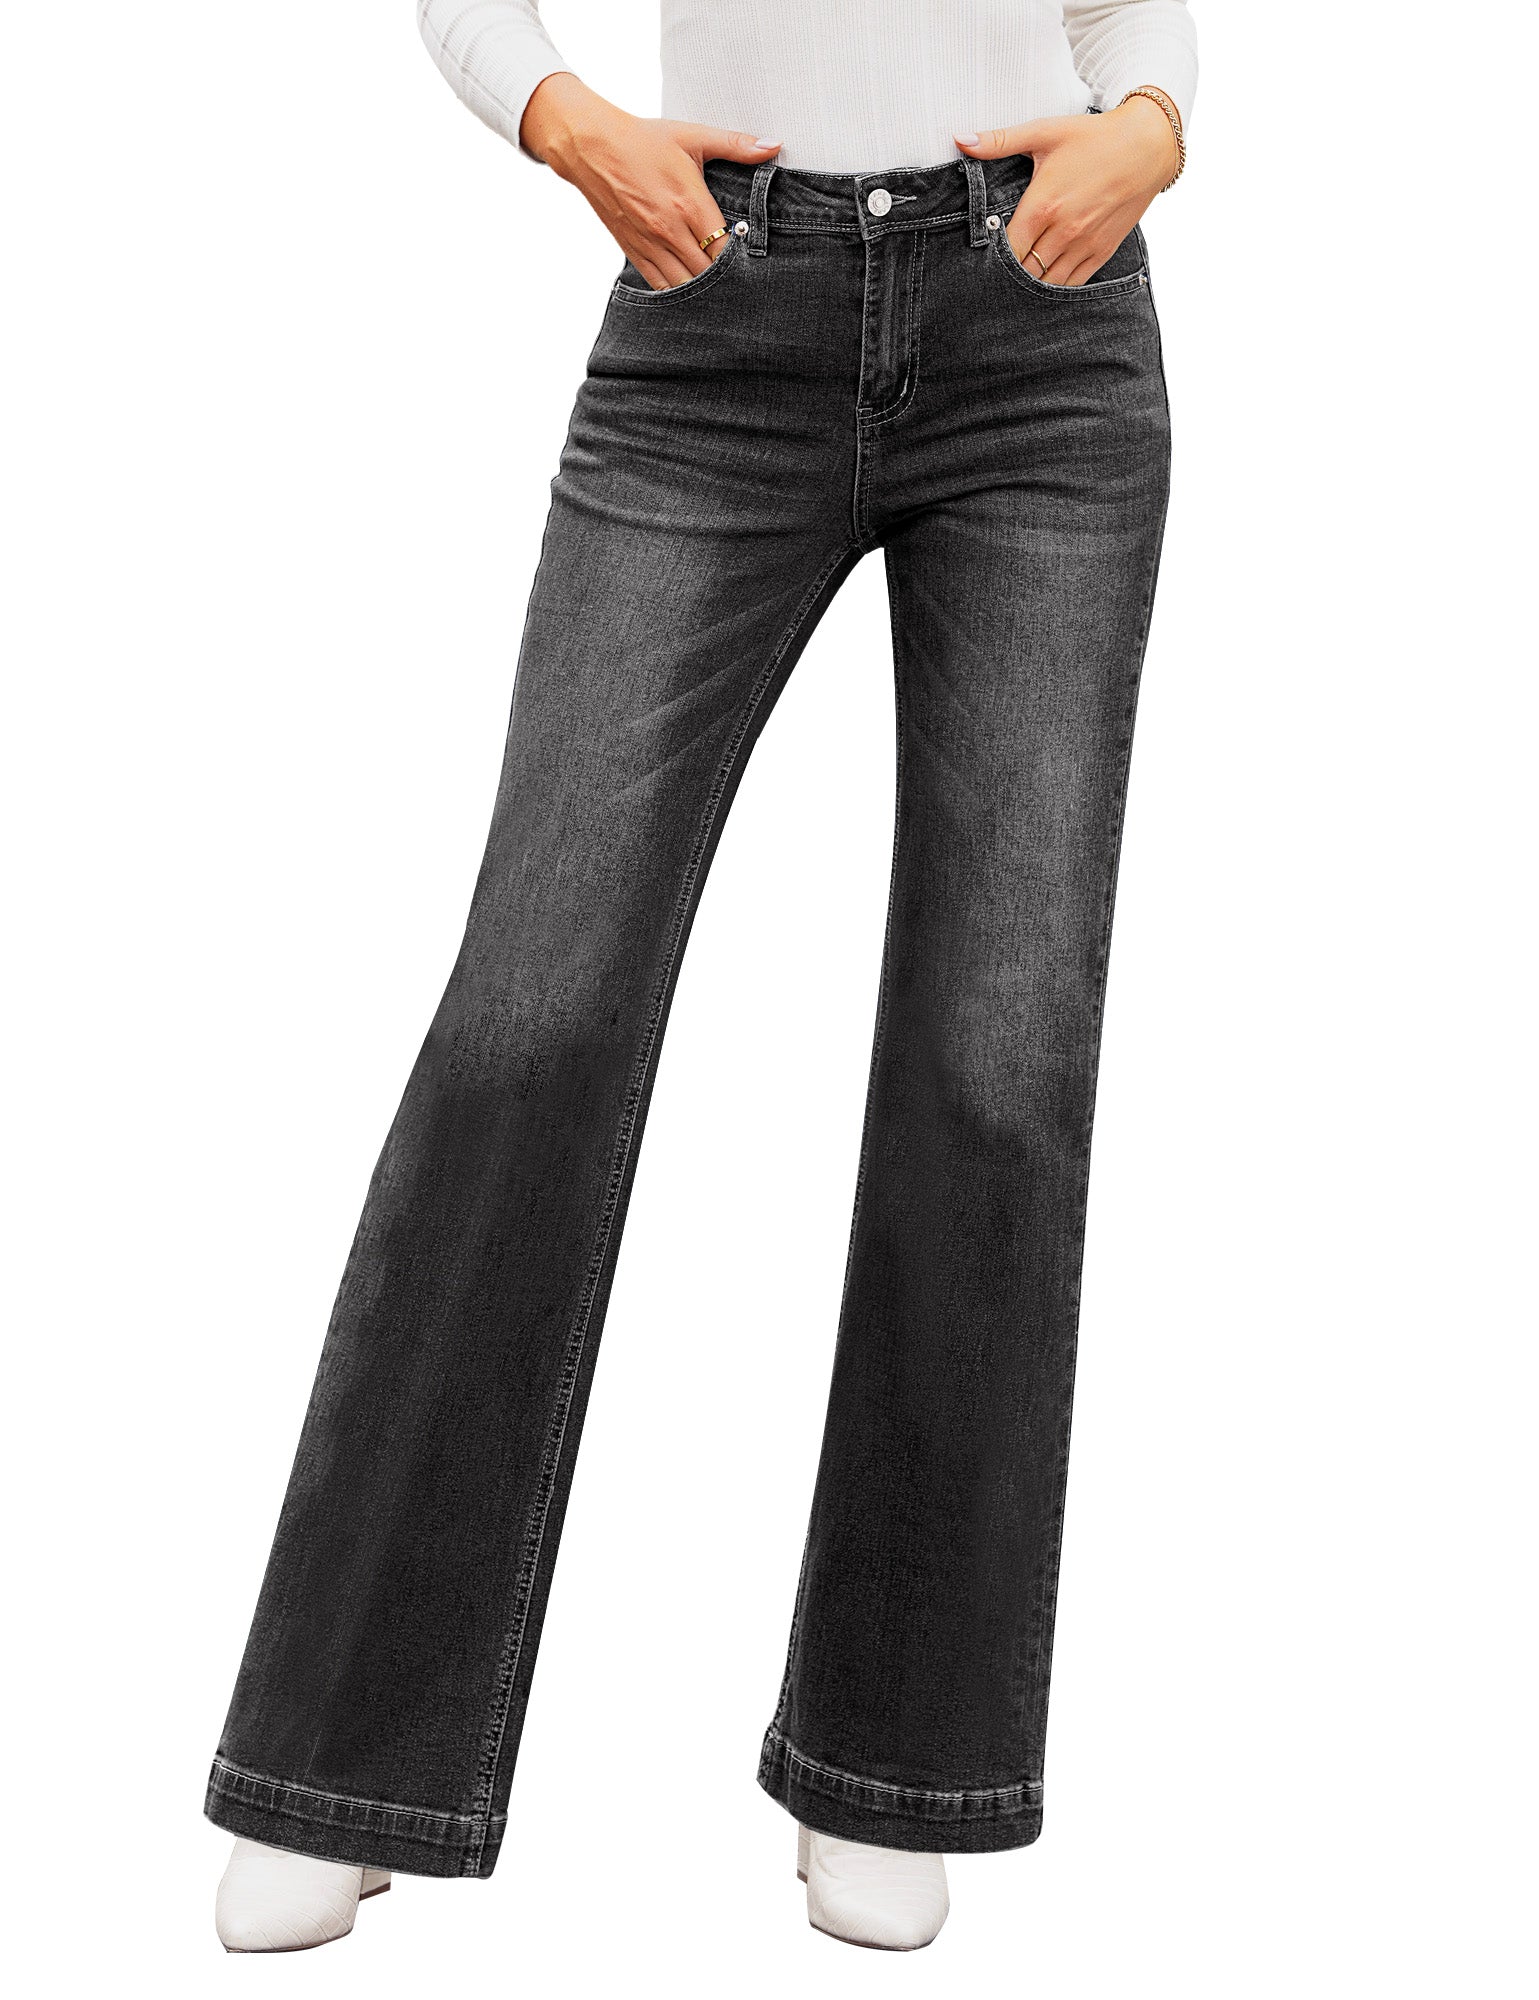 GRAPENT Cargo Jeans for Women Wide Leg Baggy High Waisted Jean